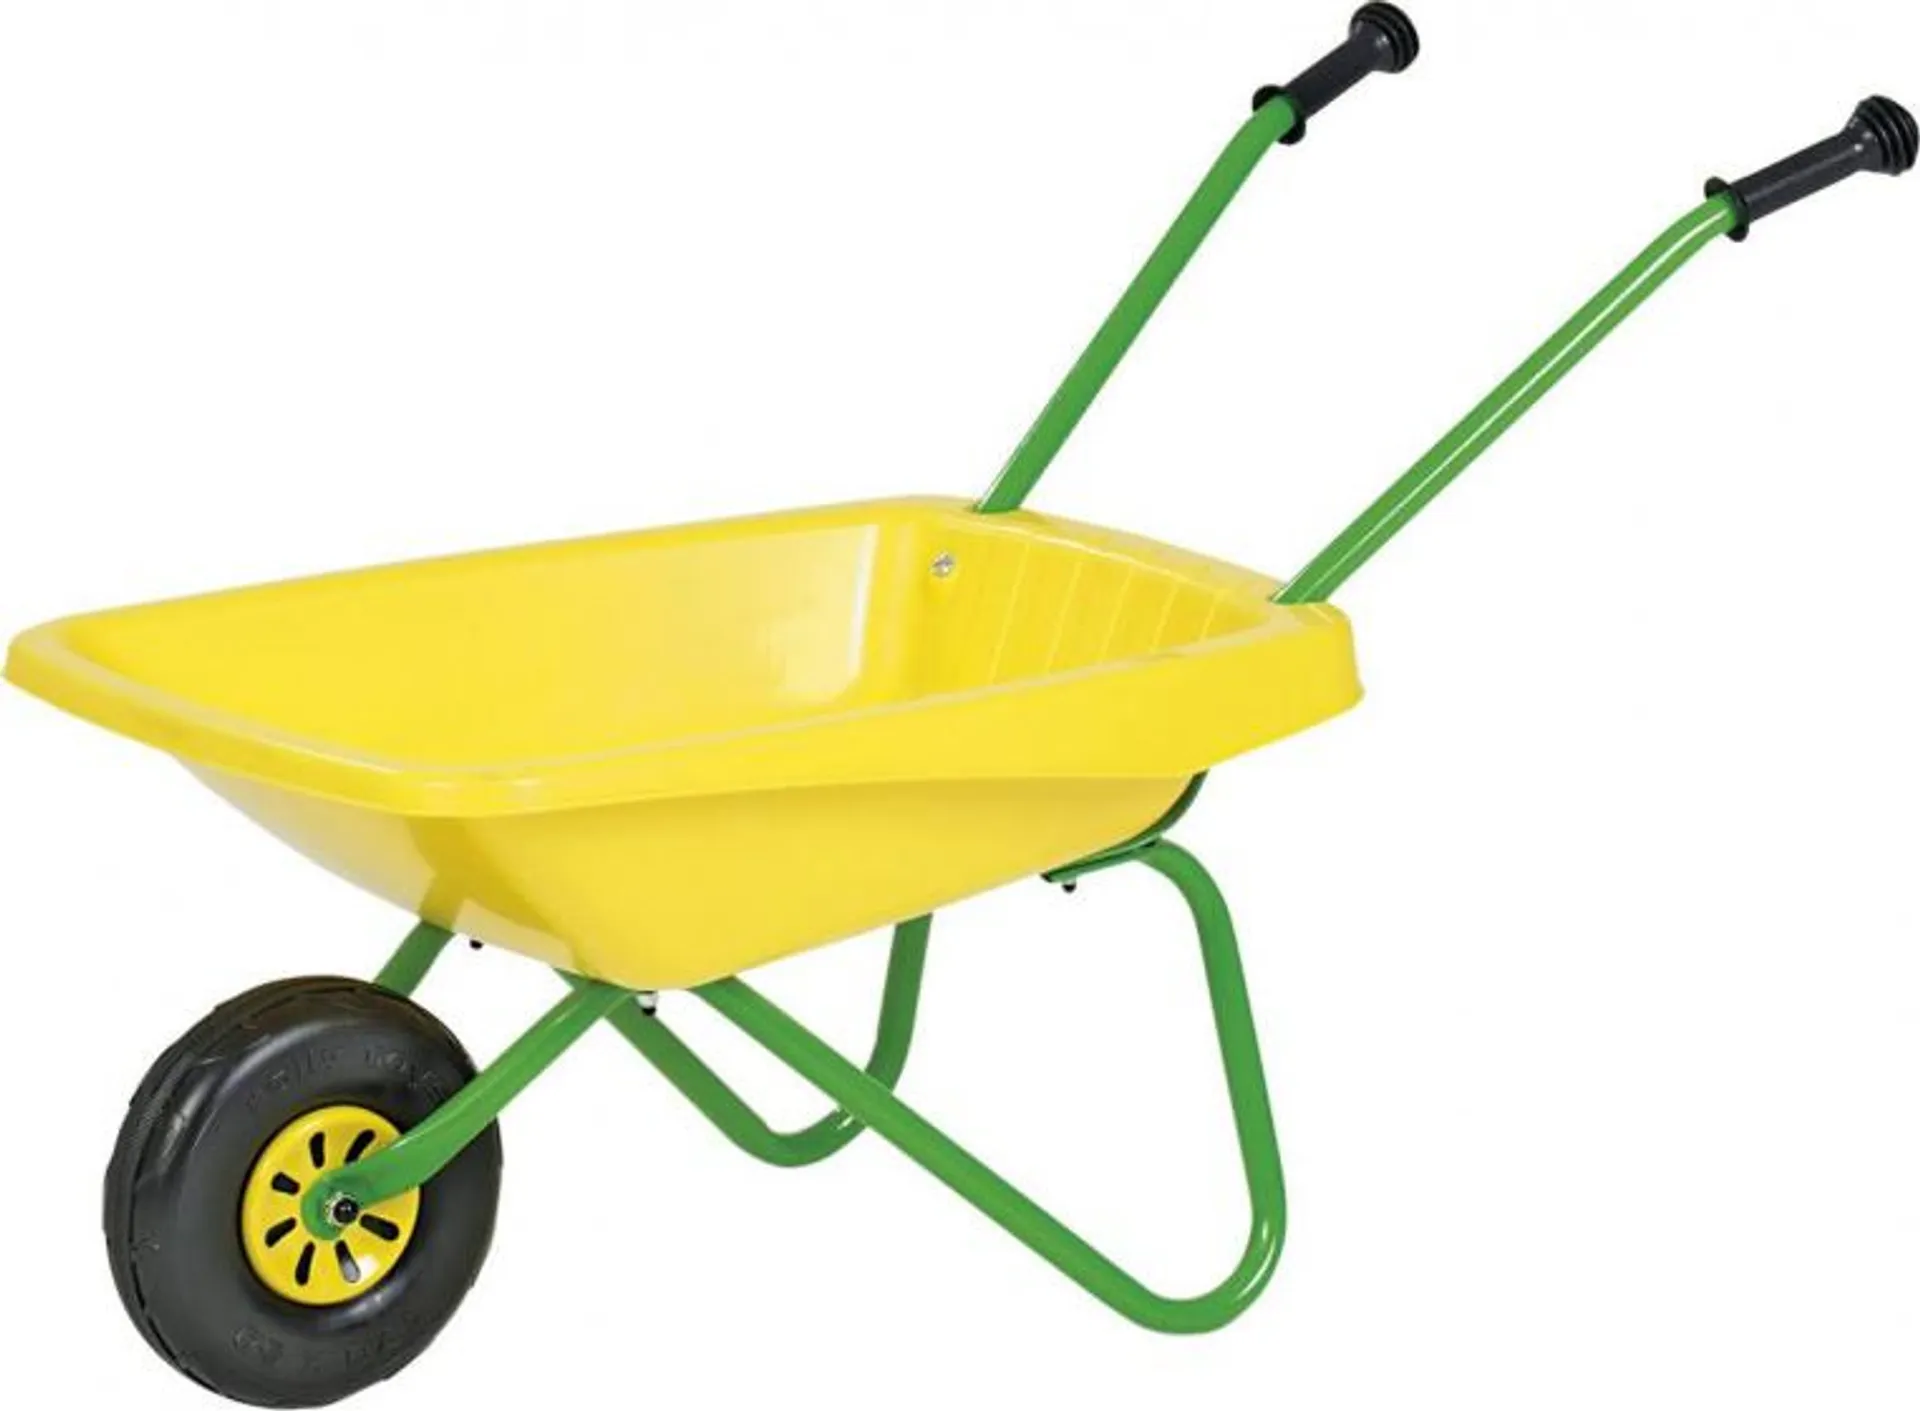 Rolly Toys kruiwagen kunststof junior geel/groen